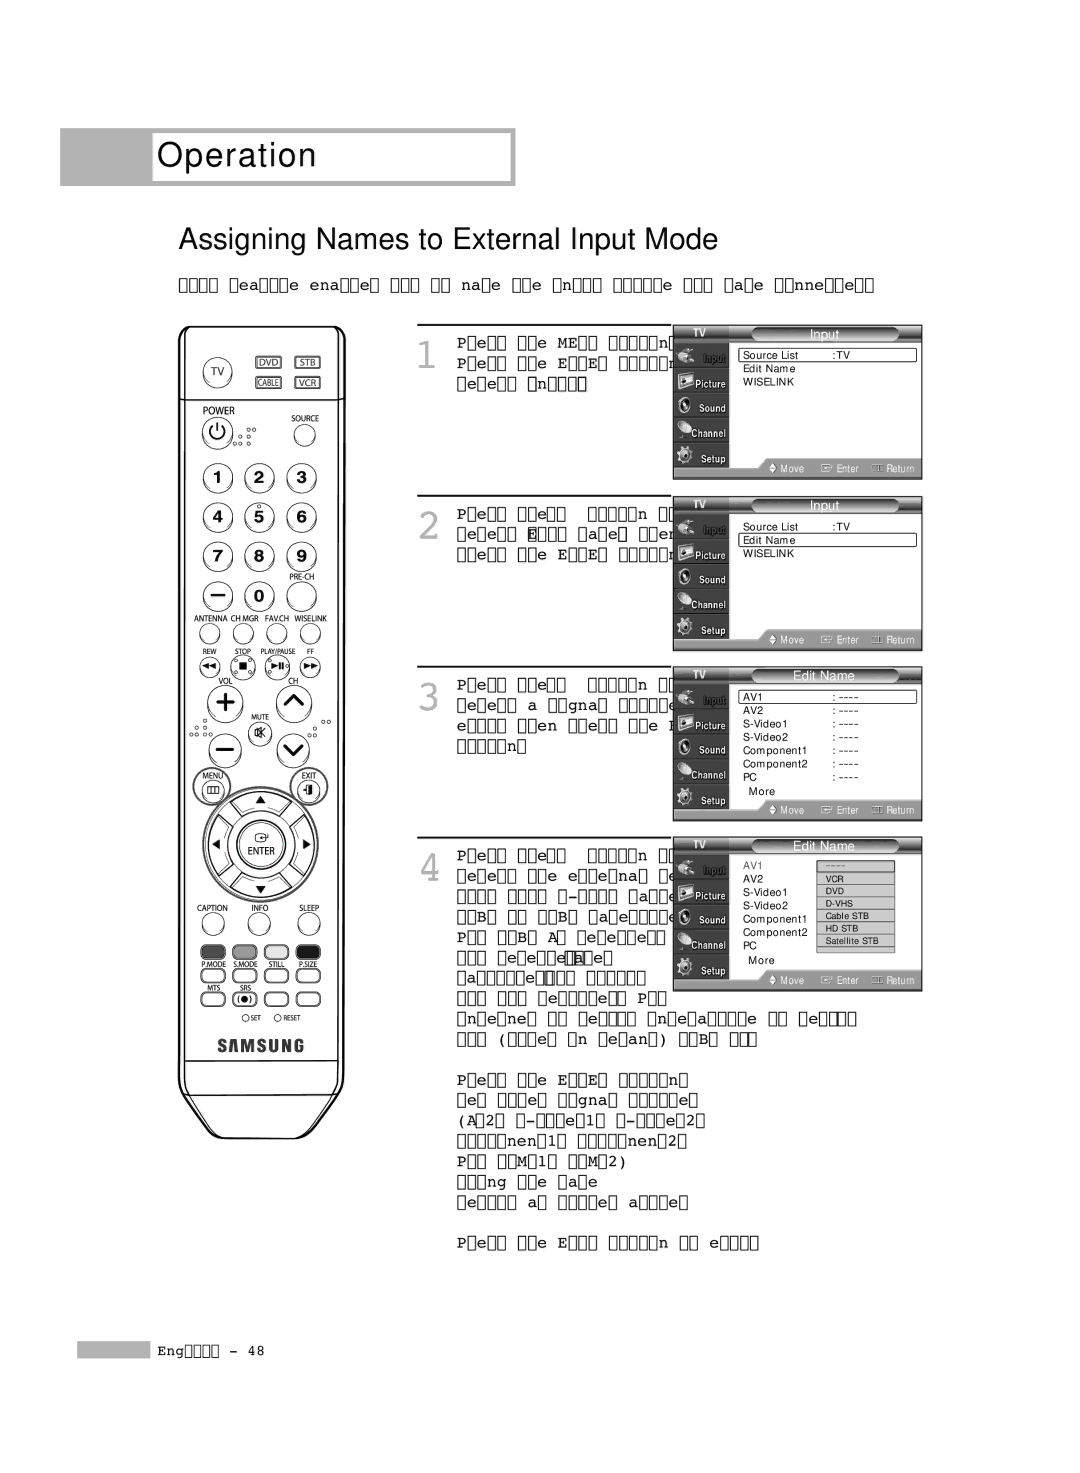 Samsung HL-S4676S manual Assigning Names to External Input Mode 